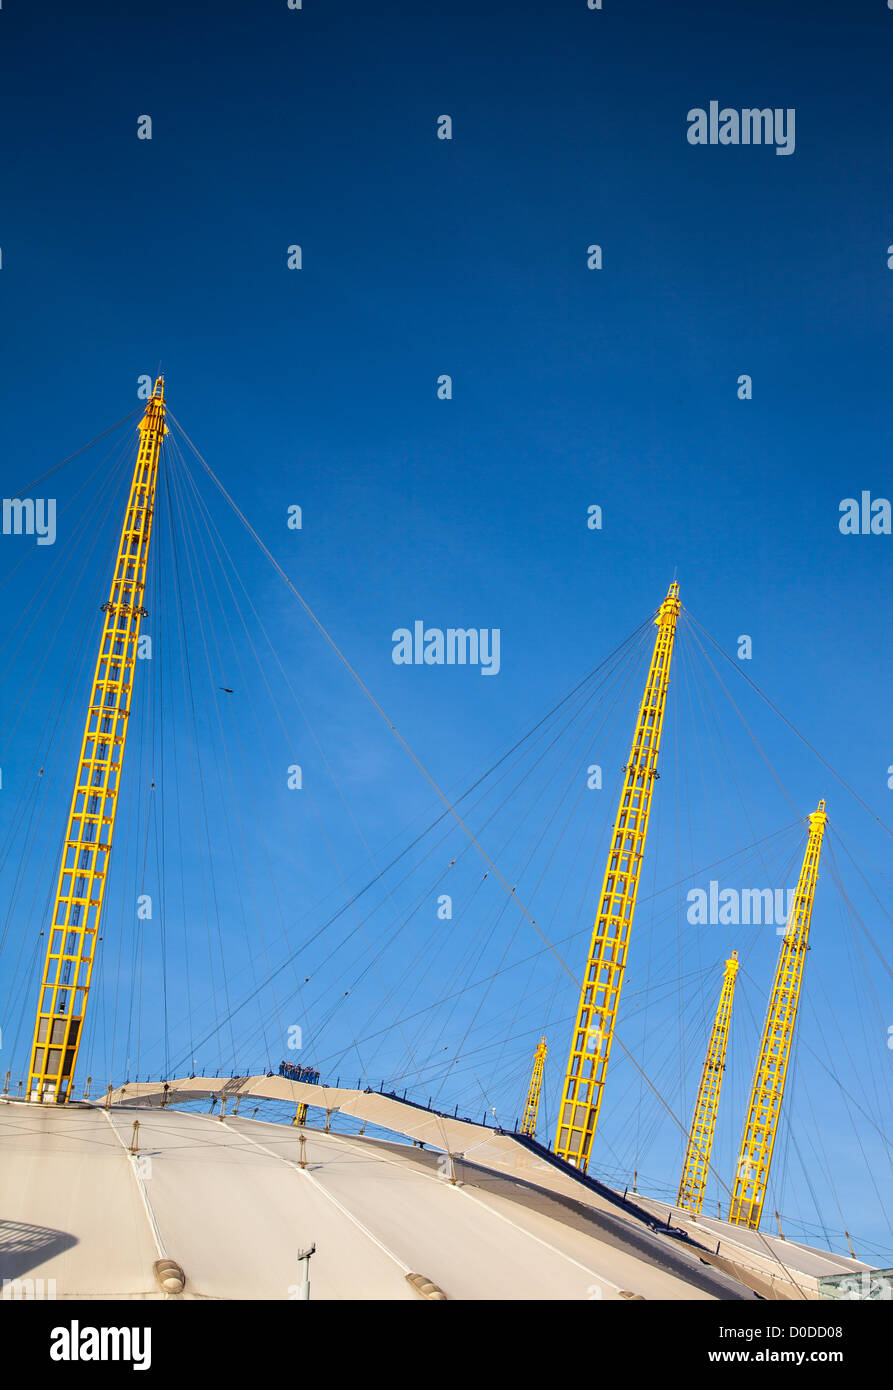 02 Arena, Greenwich, London Stock Photo